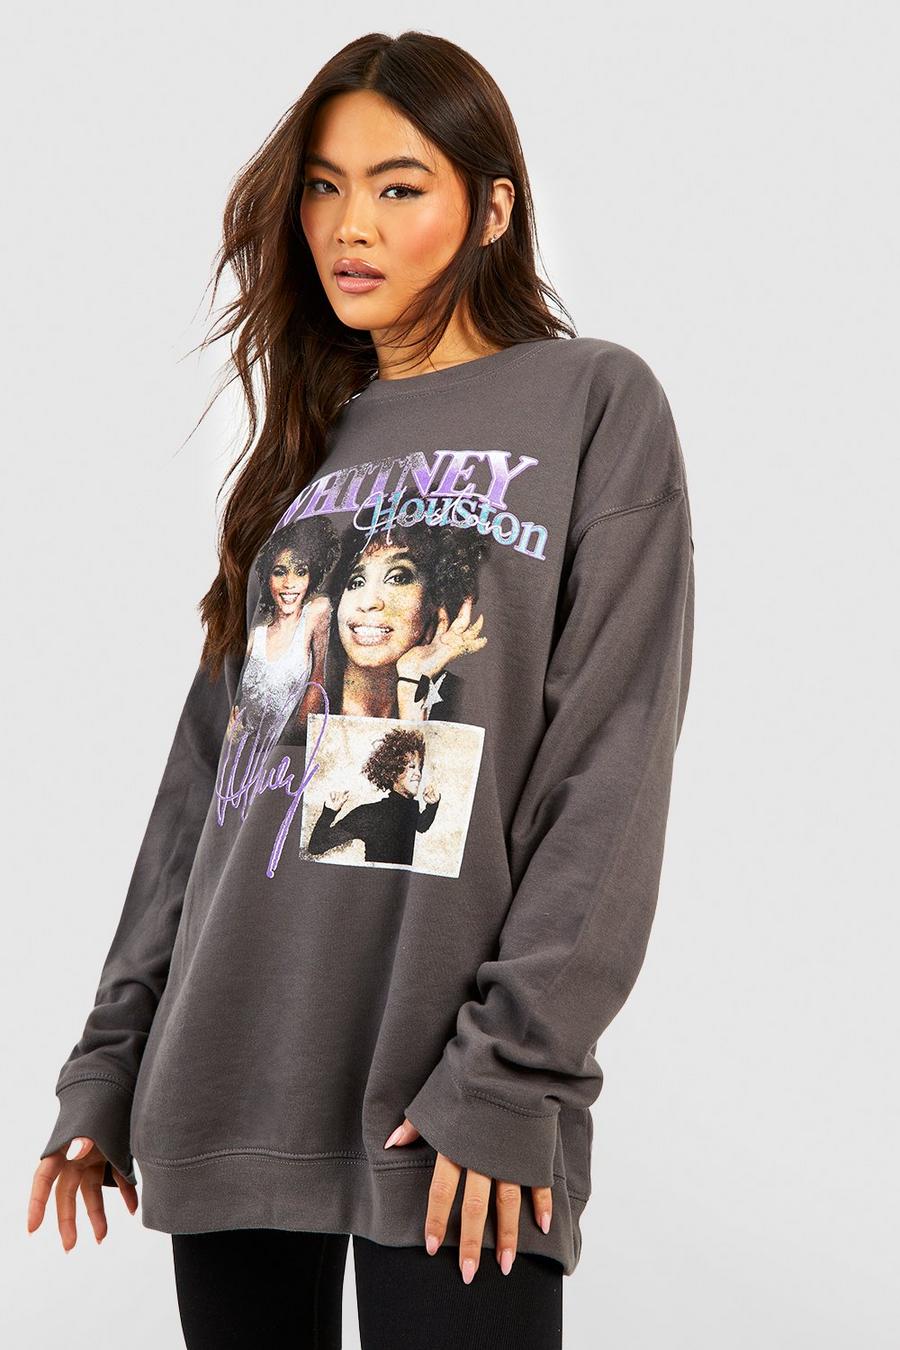 Charcoal grey Oversized Whitney Houston License Band Sweatshirt